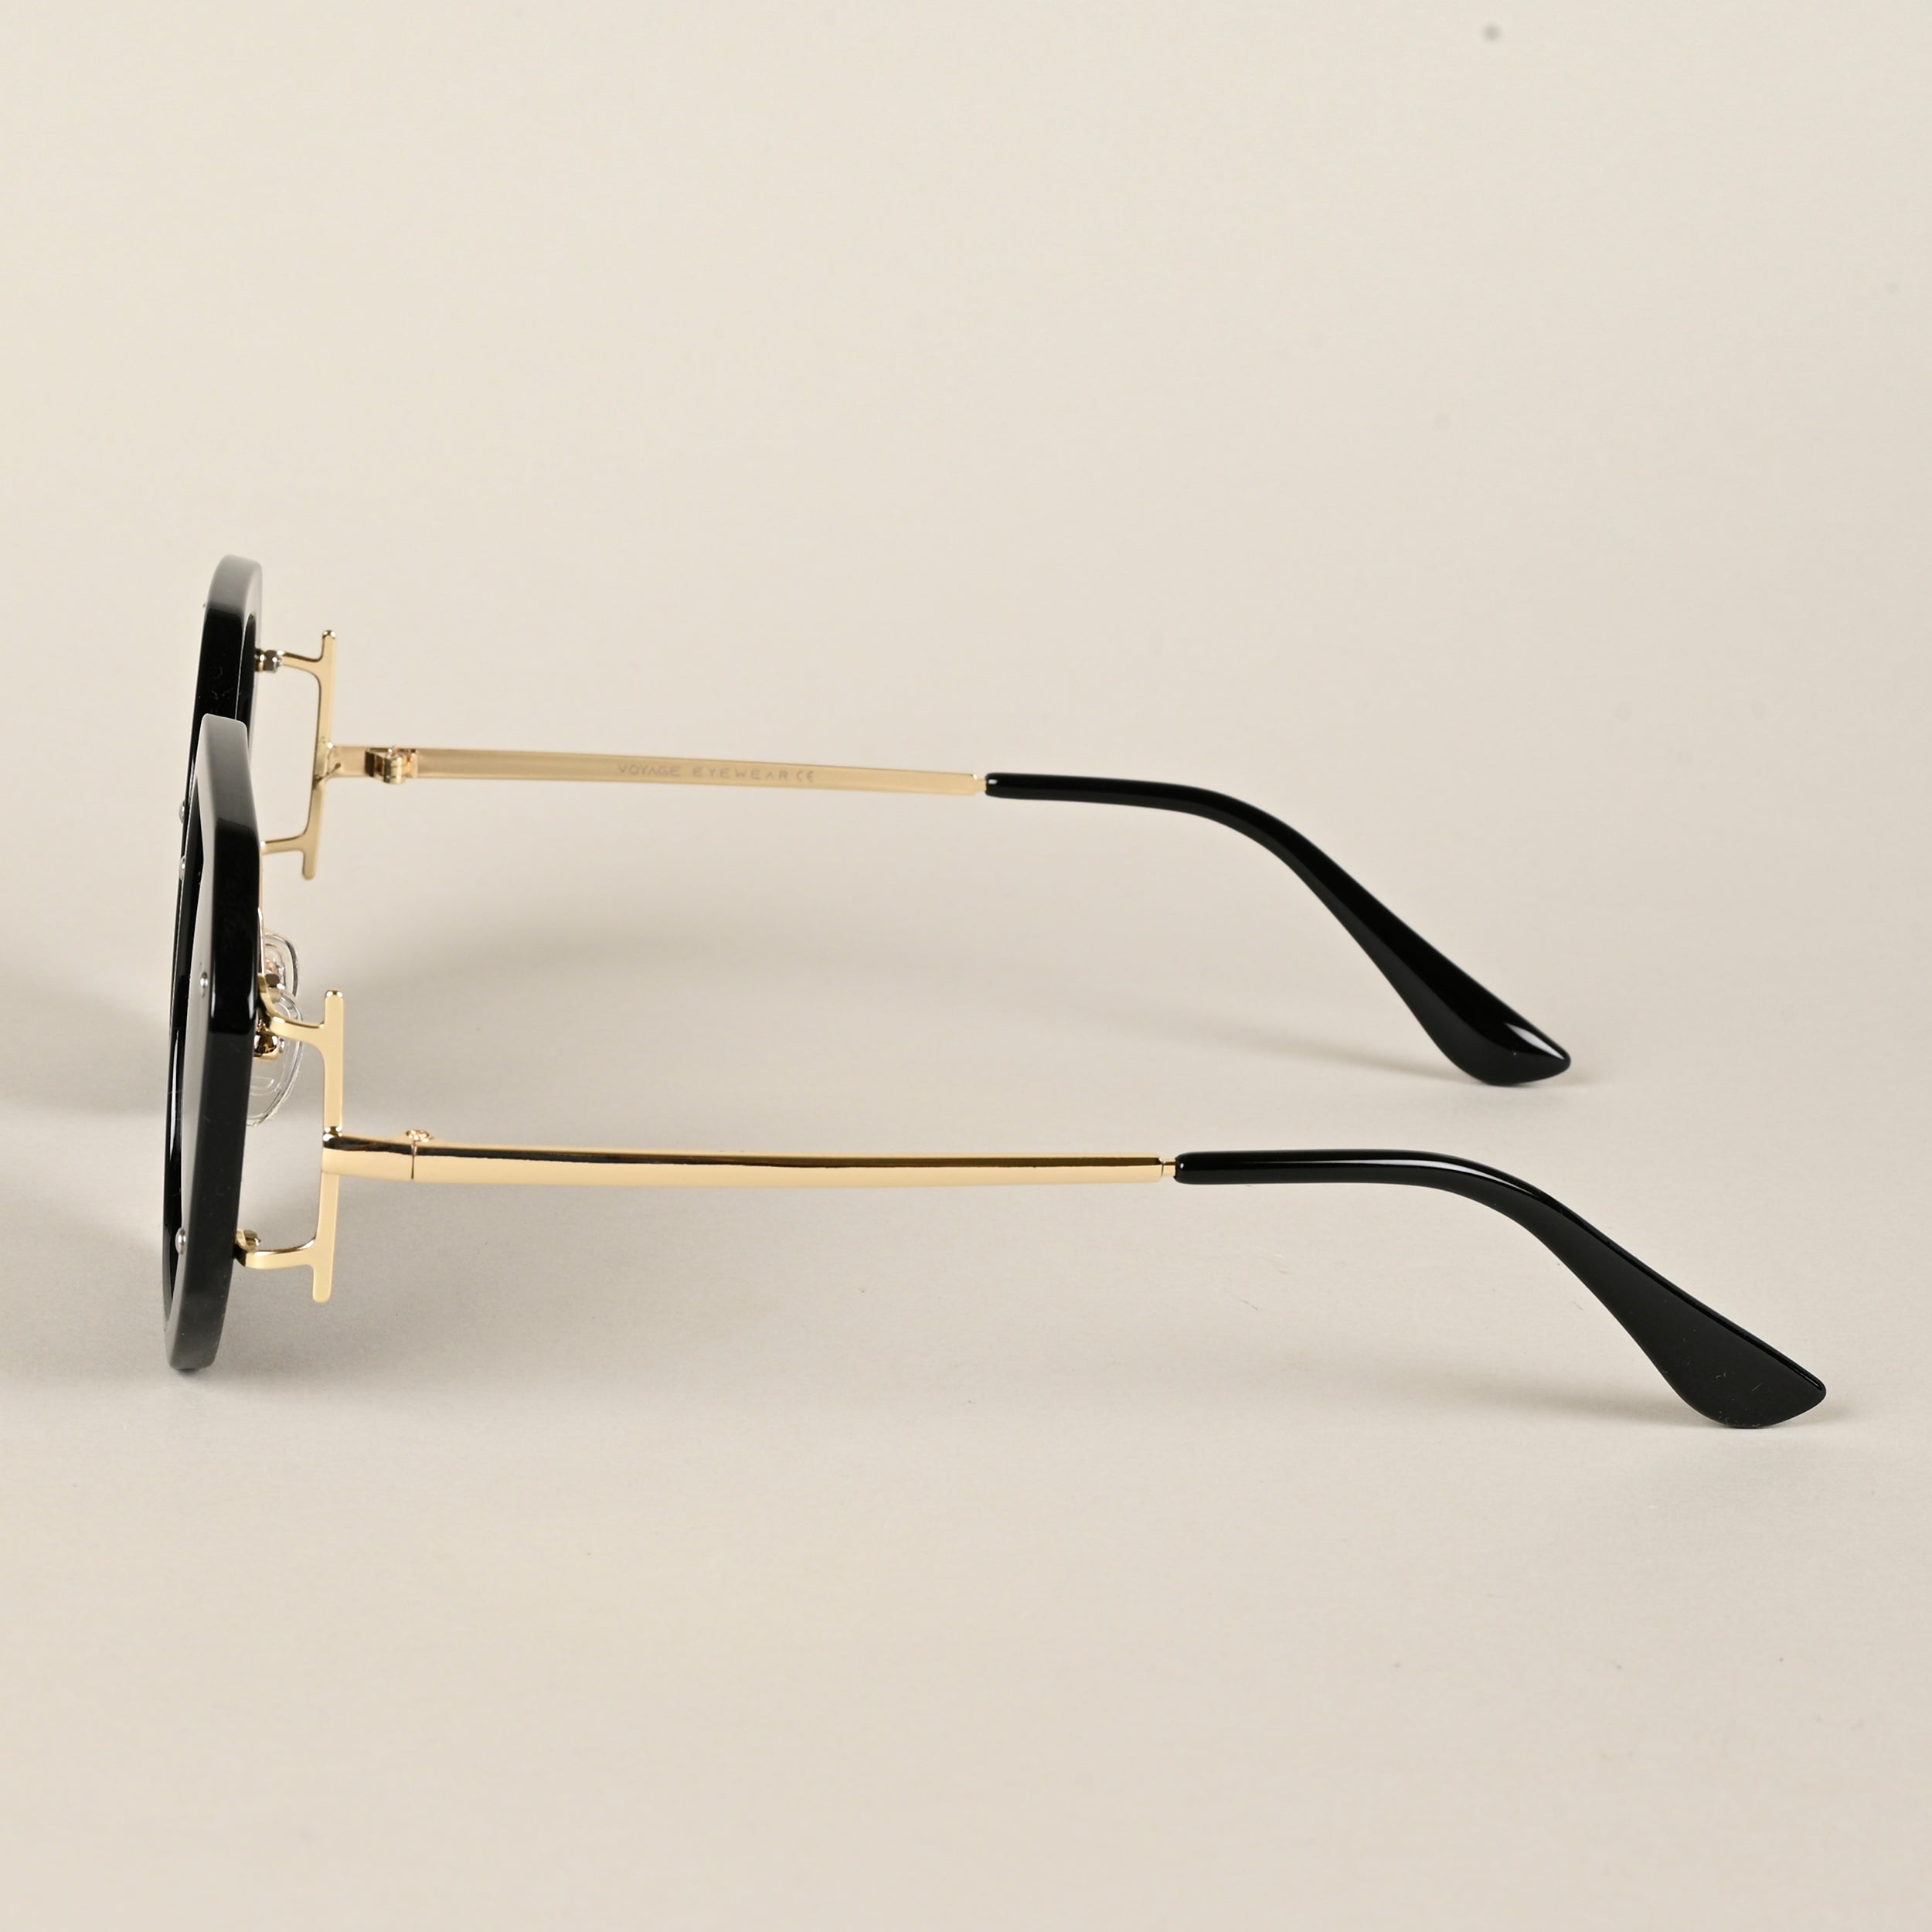 Voyage Black Geometric Sunglasses for Men & Women - MG4198